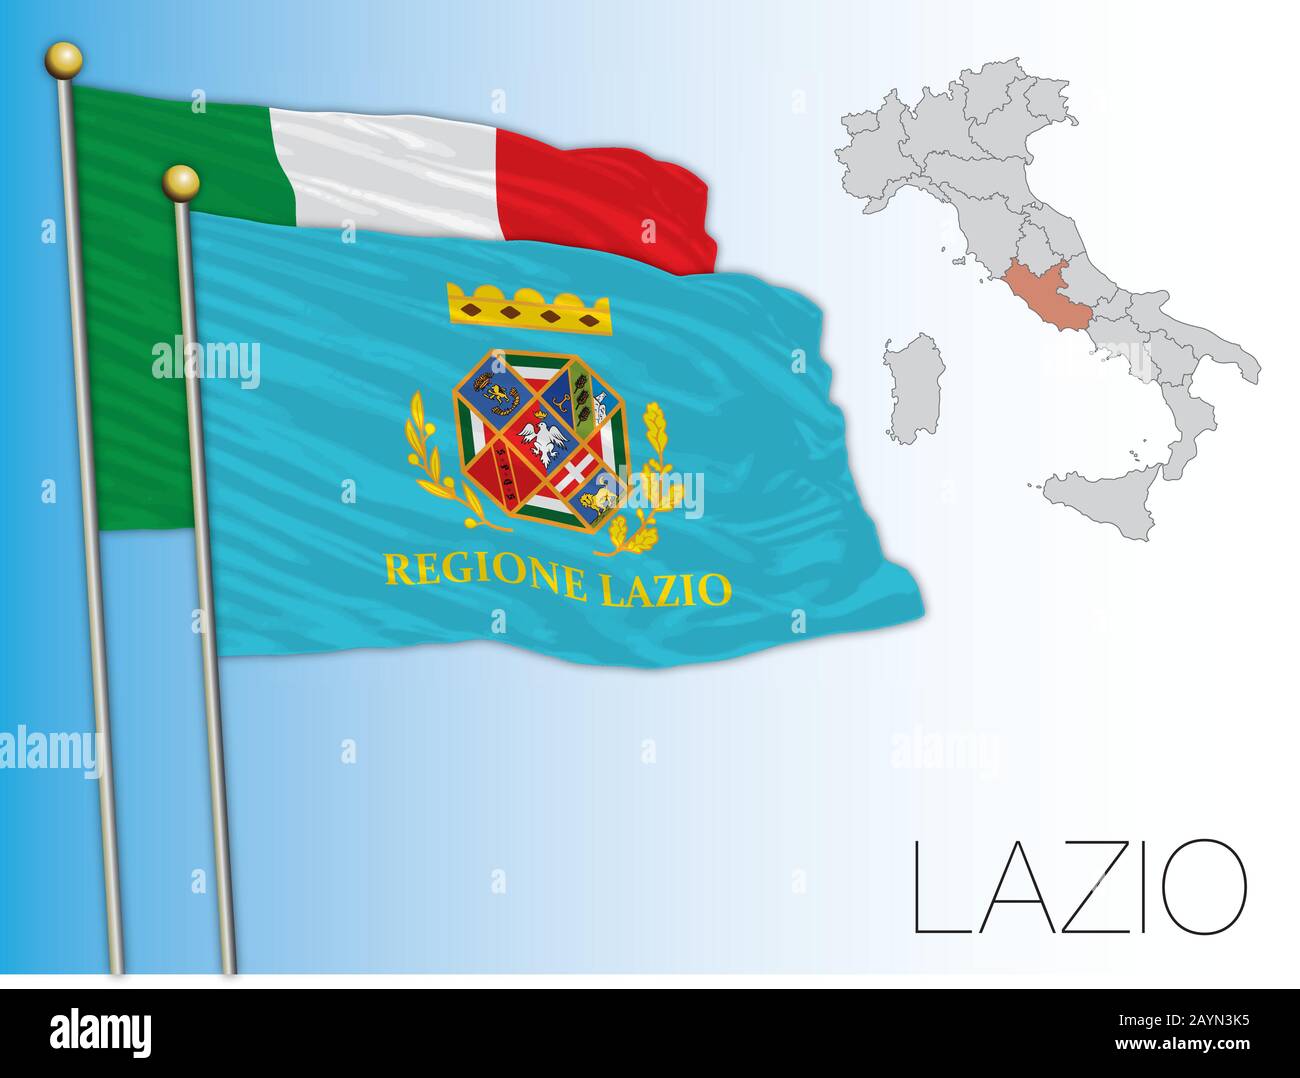 Lazio offizielle regionale Flagge und Karte, Italien, Vektorgrafiken Stock Vektor